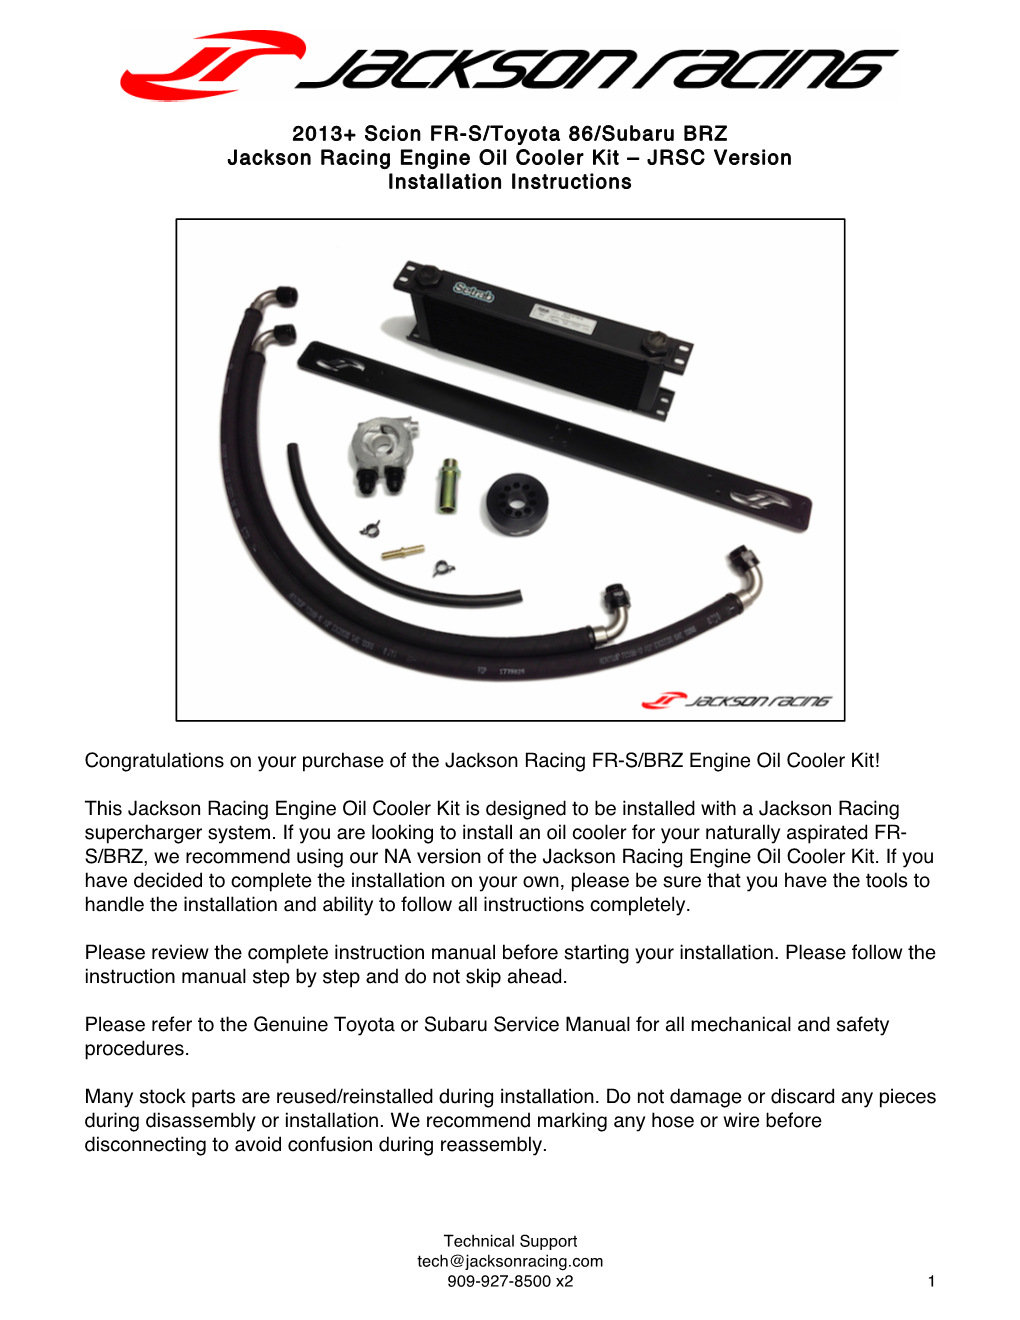 2013+ Scion FR-S/Toyota 86/Subaru BRZ Jackson Racing Engine Oil Cooler Kit – JRSC Version Installation Instructions